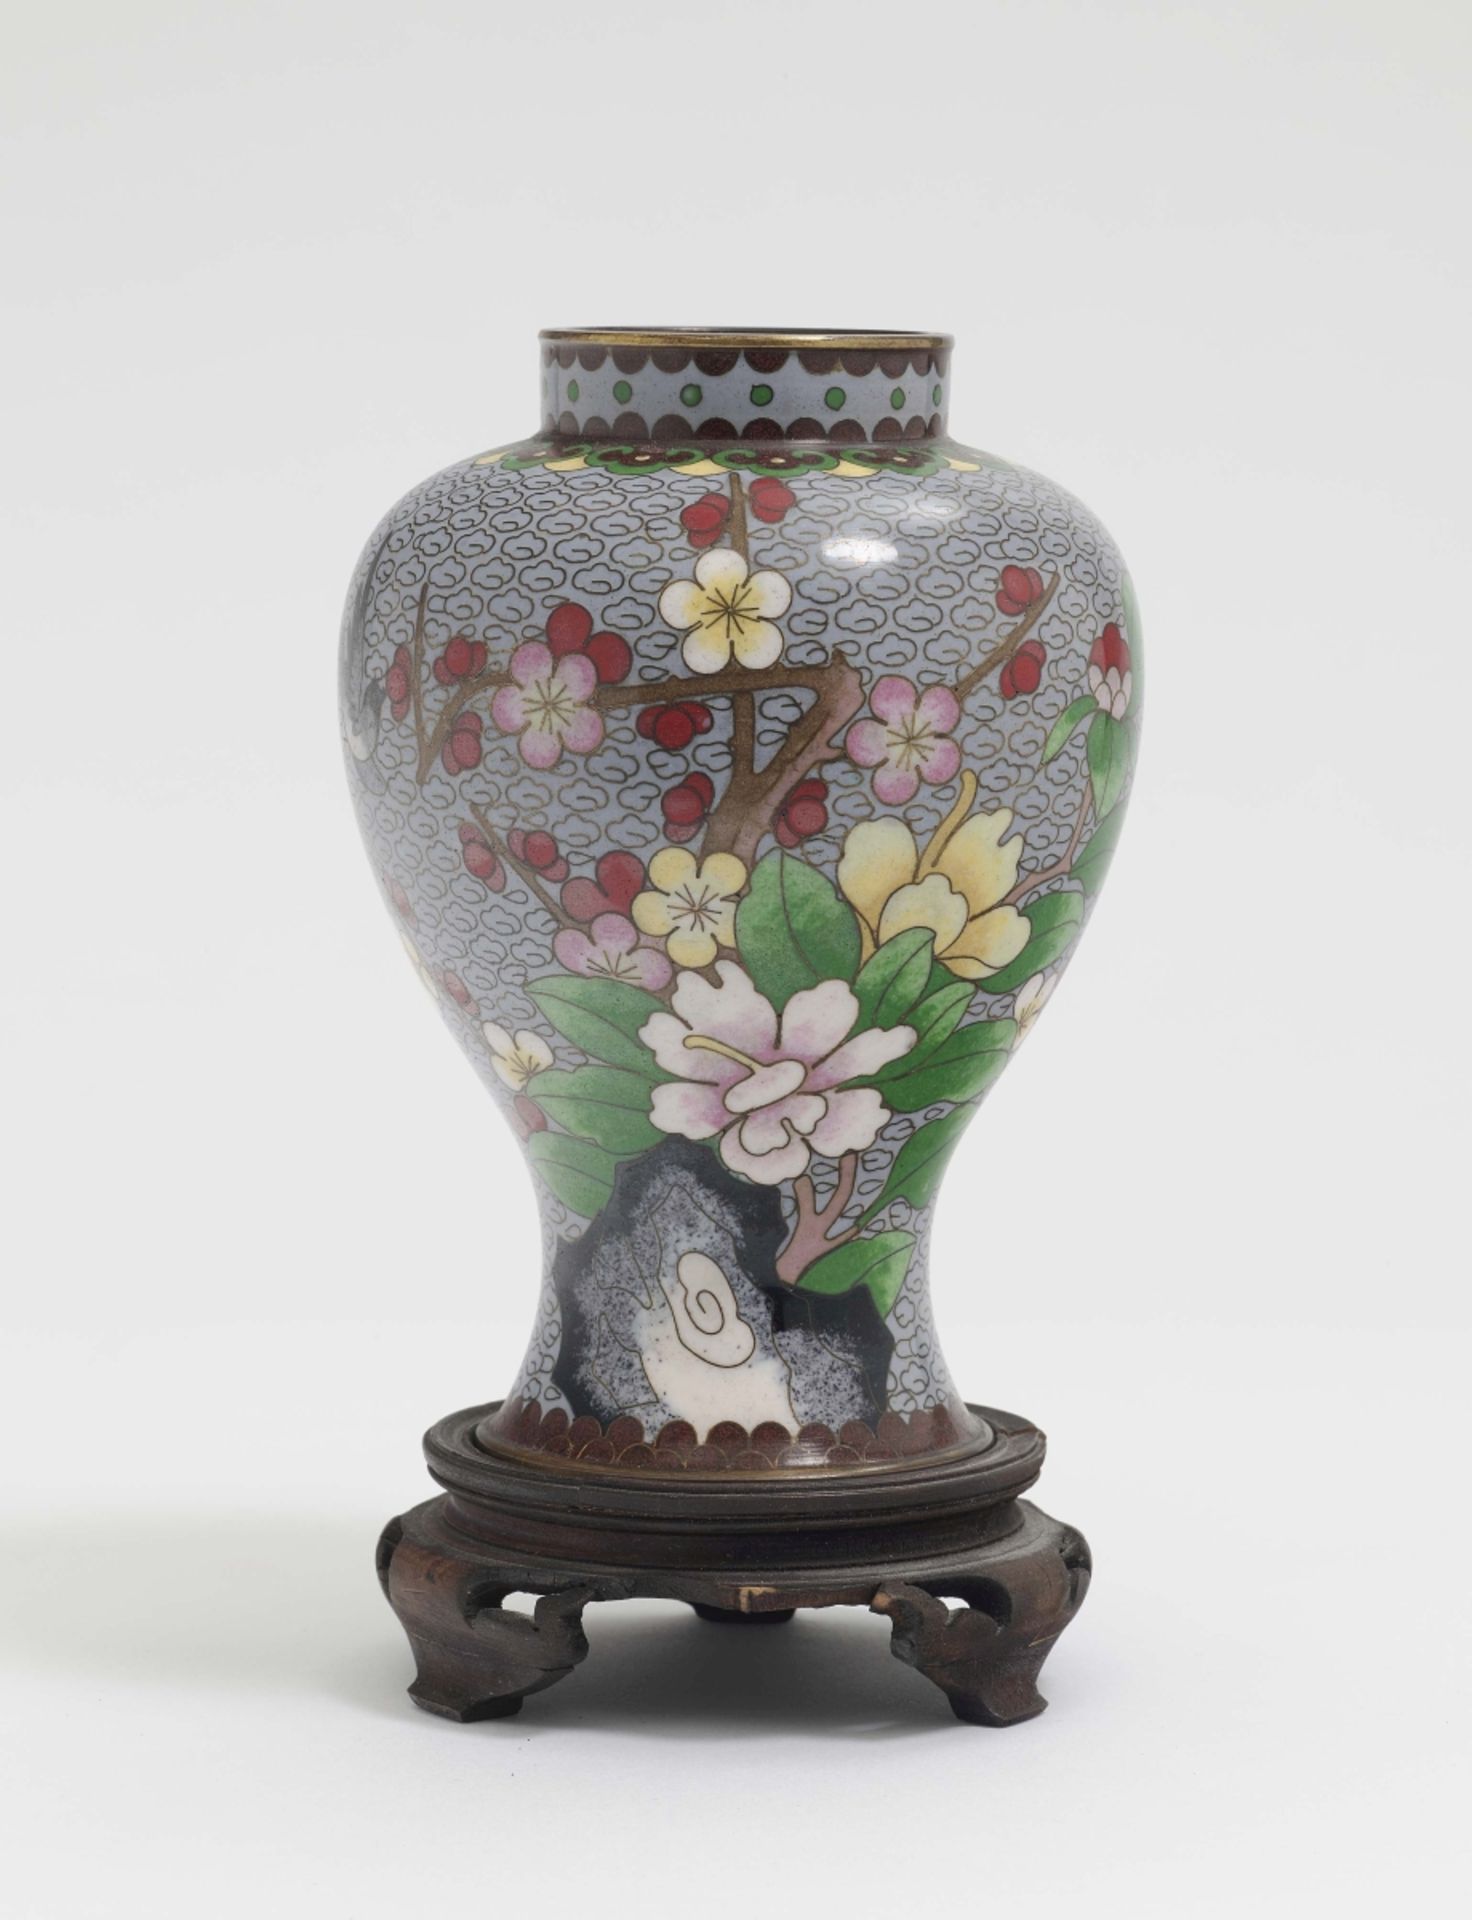 Cloisonné-Vase China Metall, Email. Balusterform. Bunter floraler Dekor auf hellgrauem Fond. H. 17